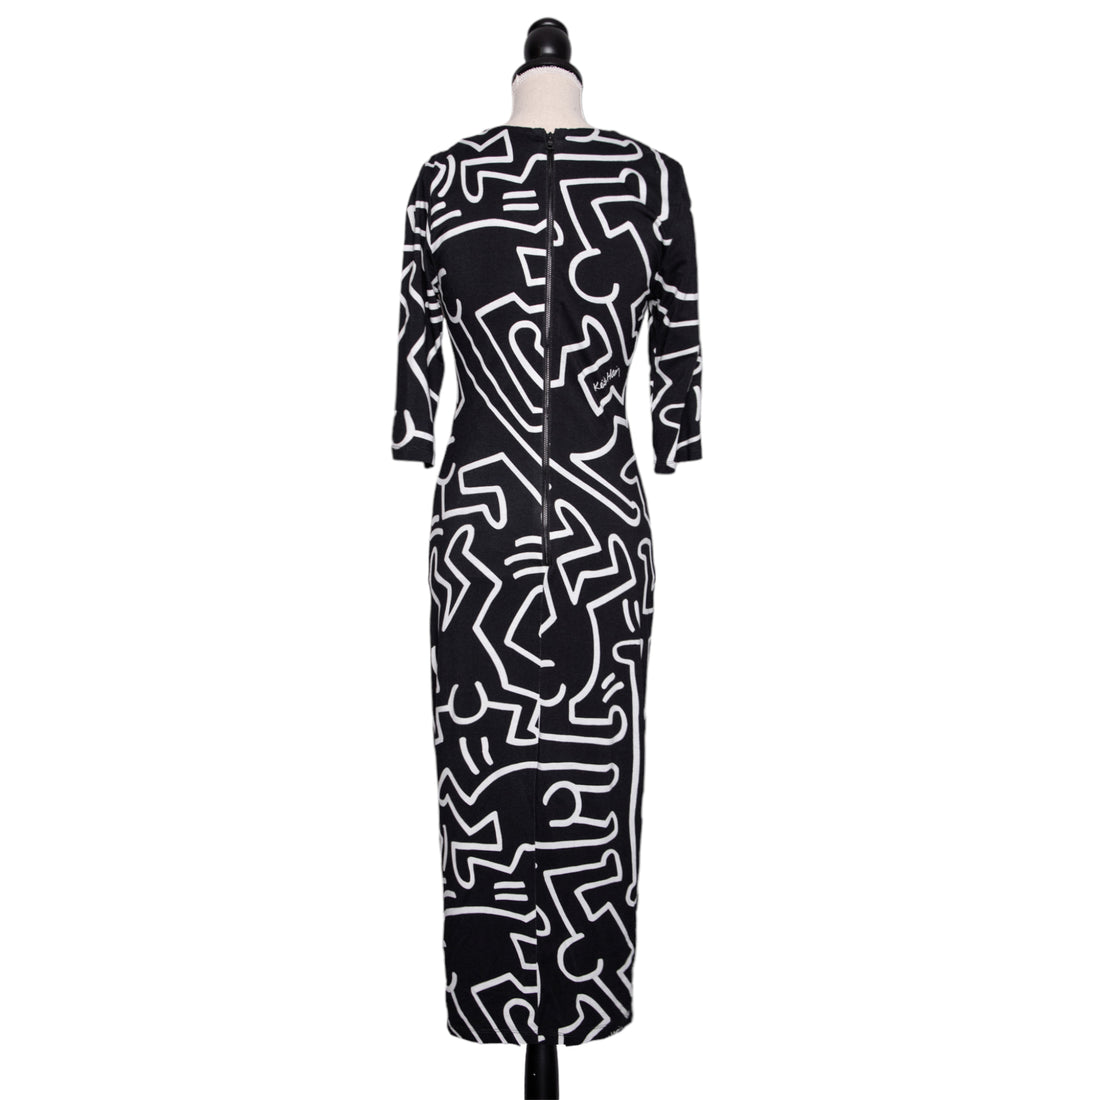 Keith Haring x Alice+Olivia midi dress in signature print